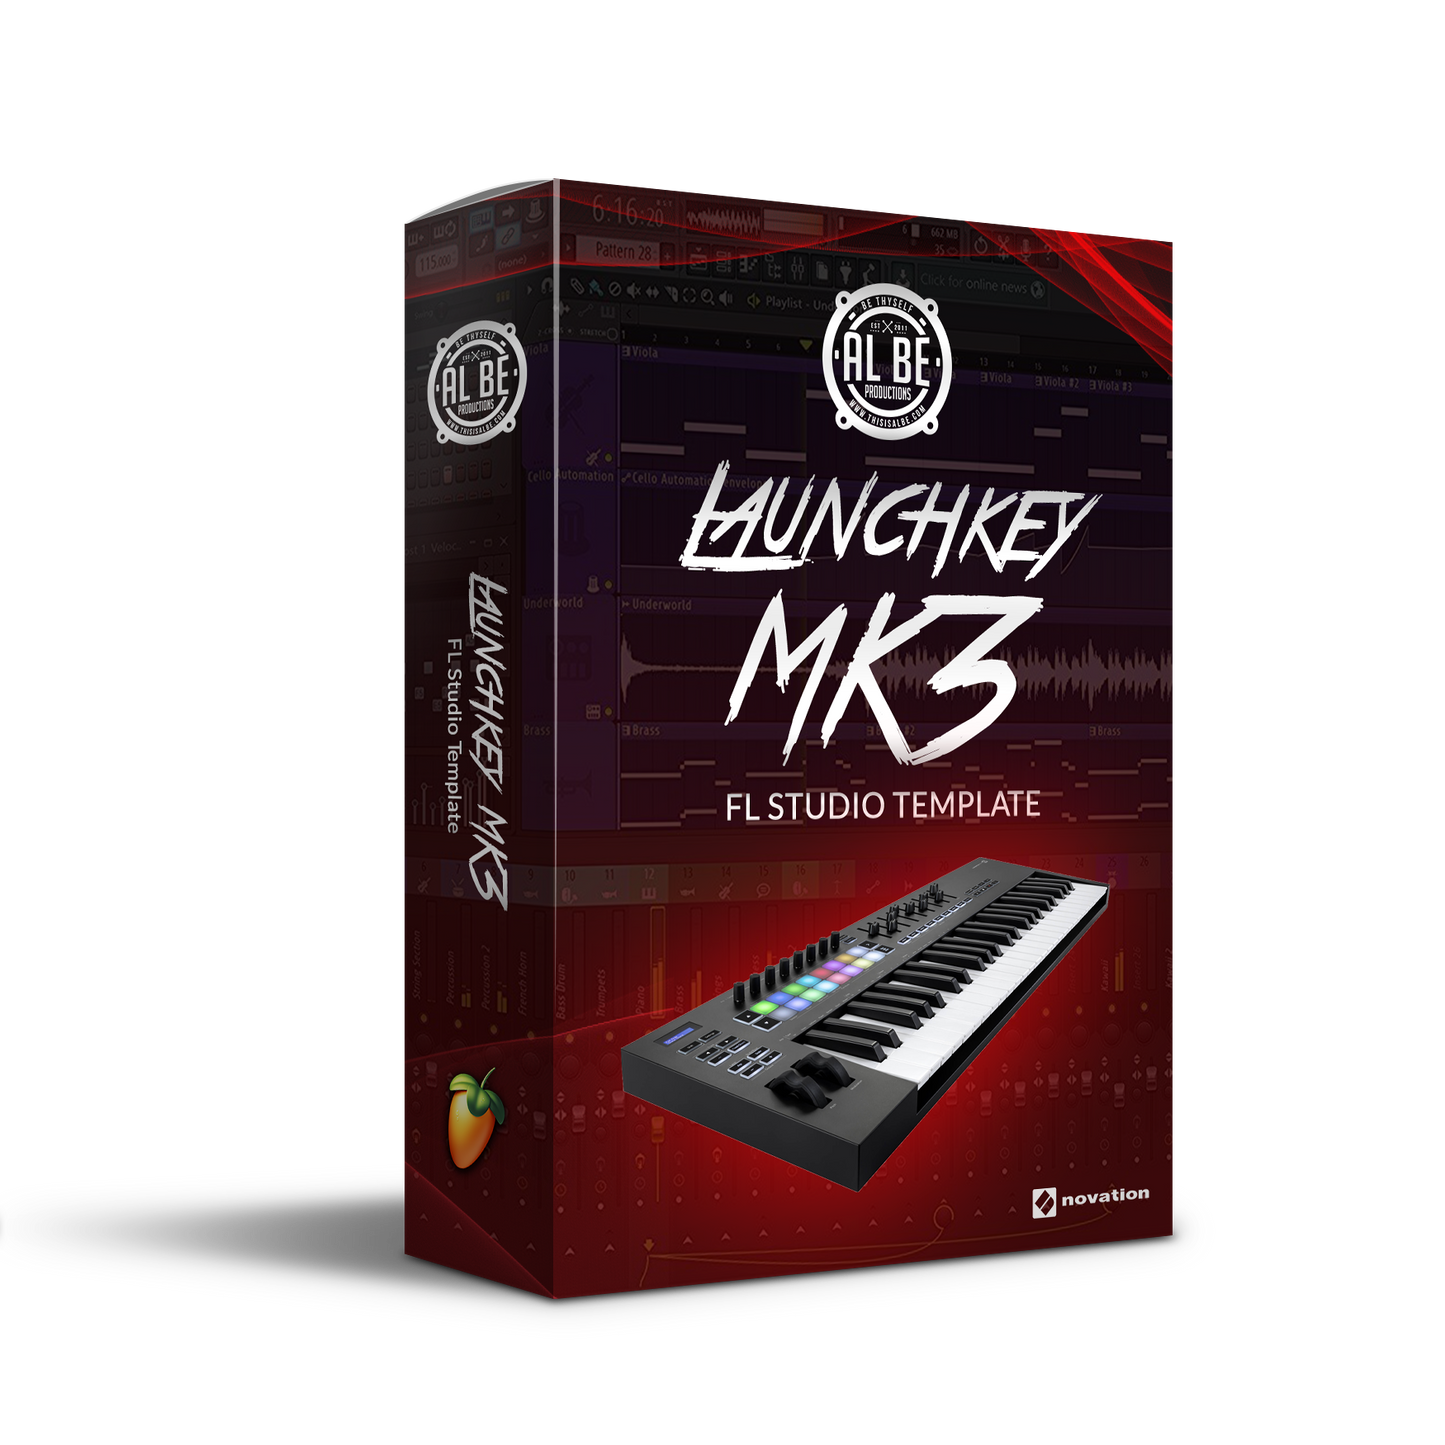 Launchkey MK3 FL Studio Template